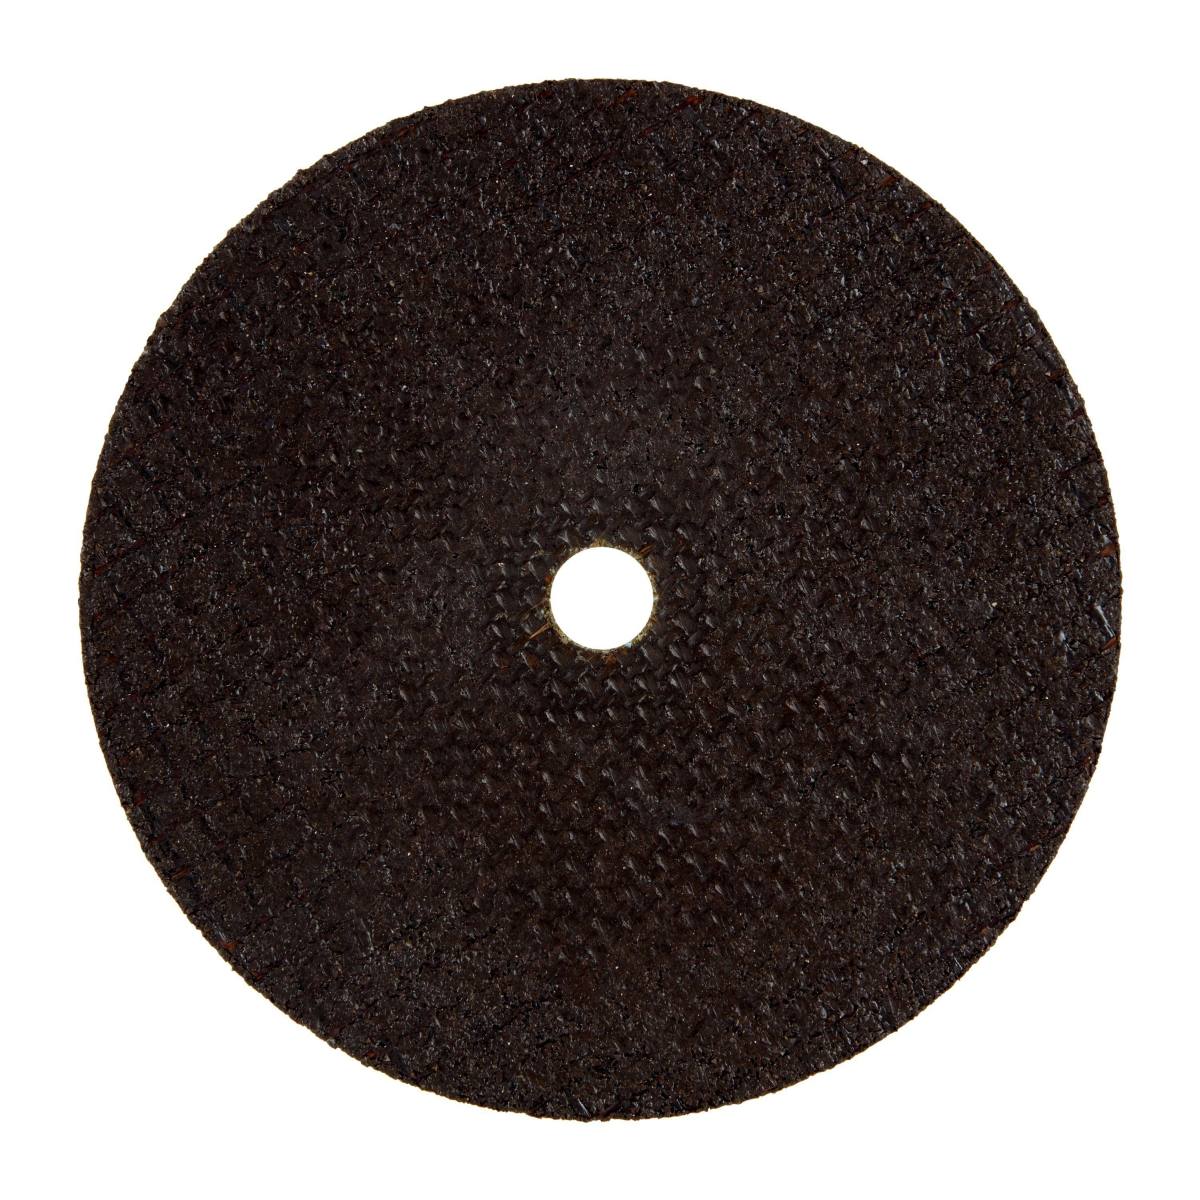 3M Cubitron II Cutting discs, 100 mm, 9.53 mm hole, 1 mm thickness